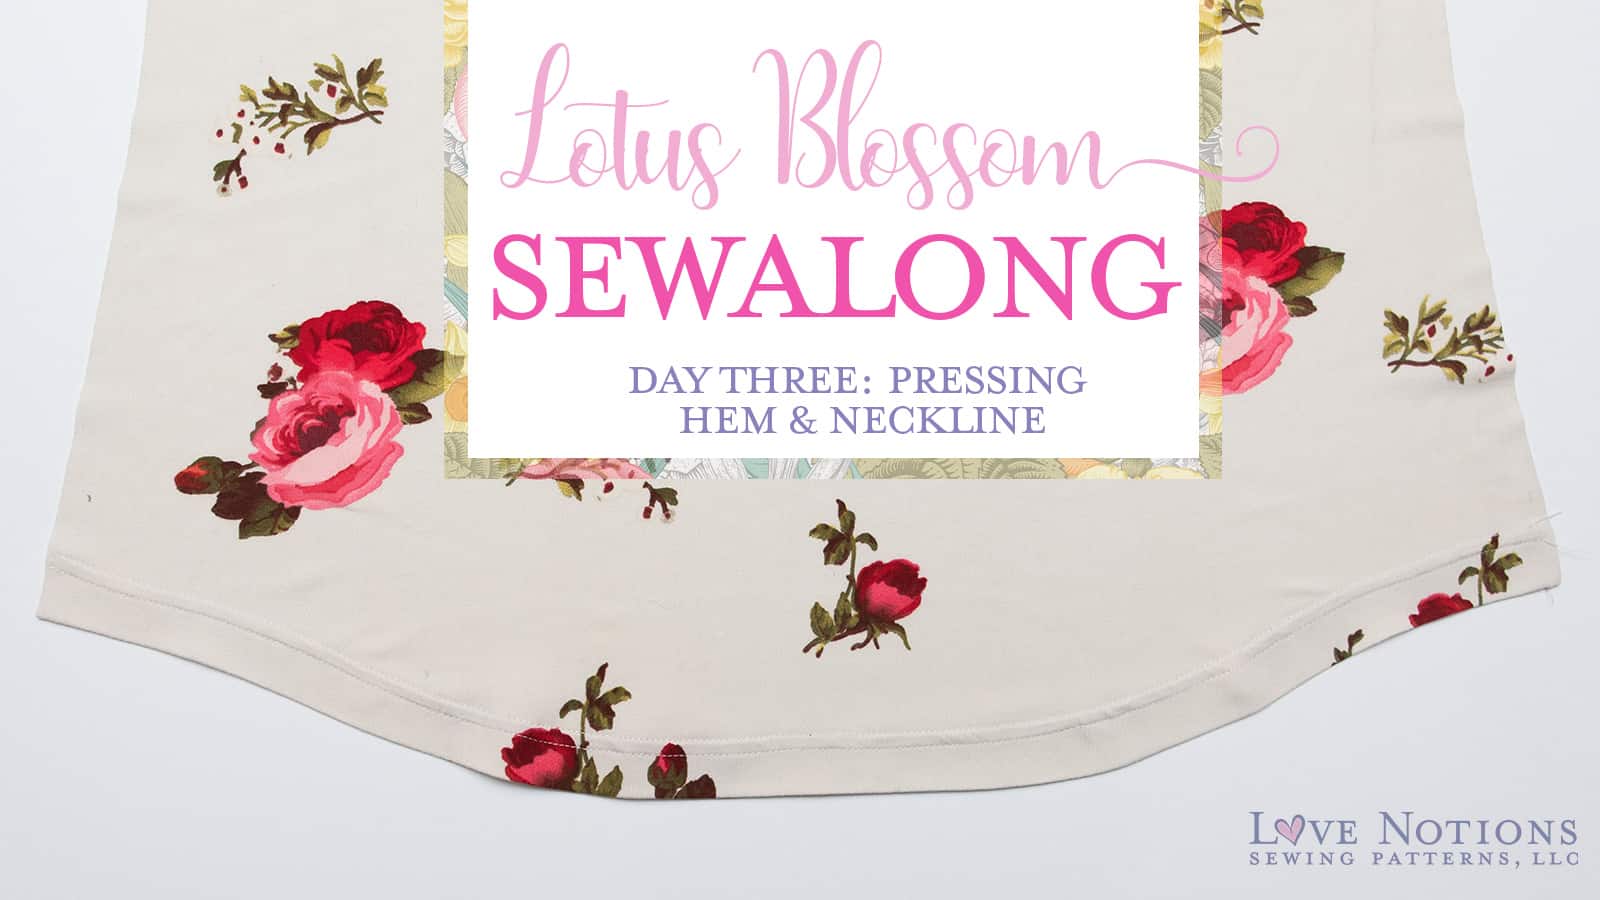 Lotus Blossom Sew Along: Day Three